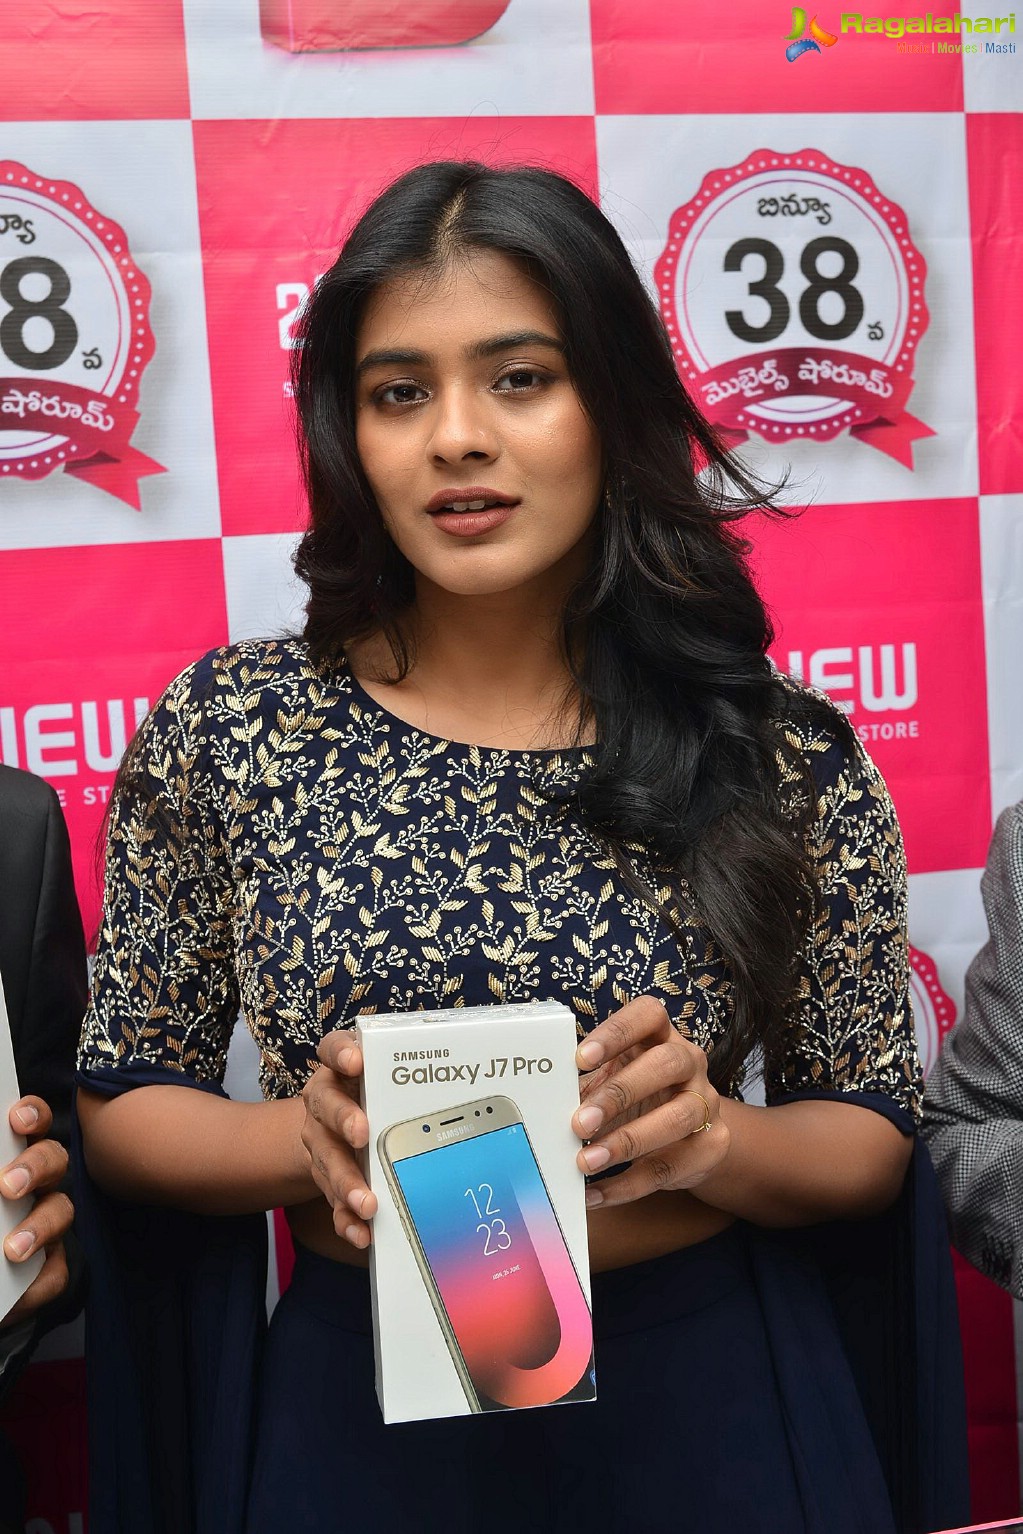 Hebah Patel at B New Store Launch, Chirala